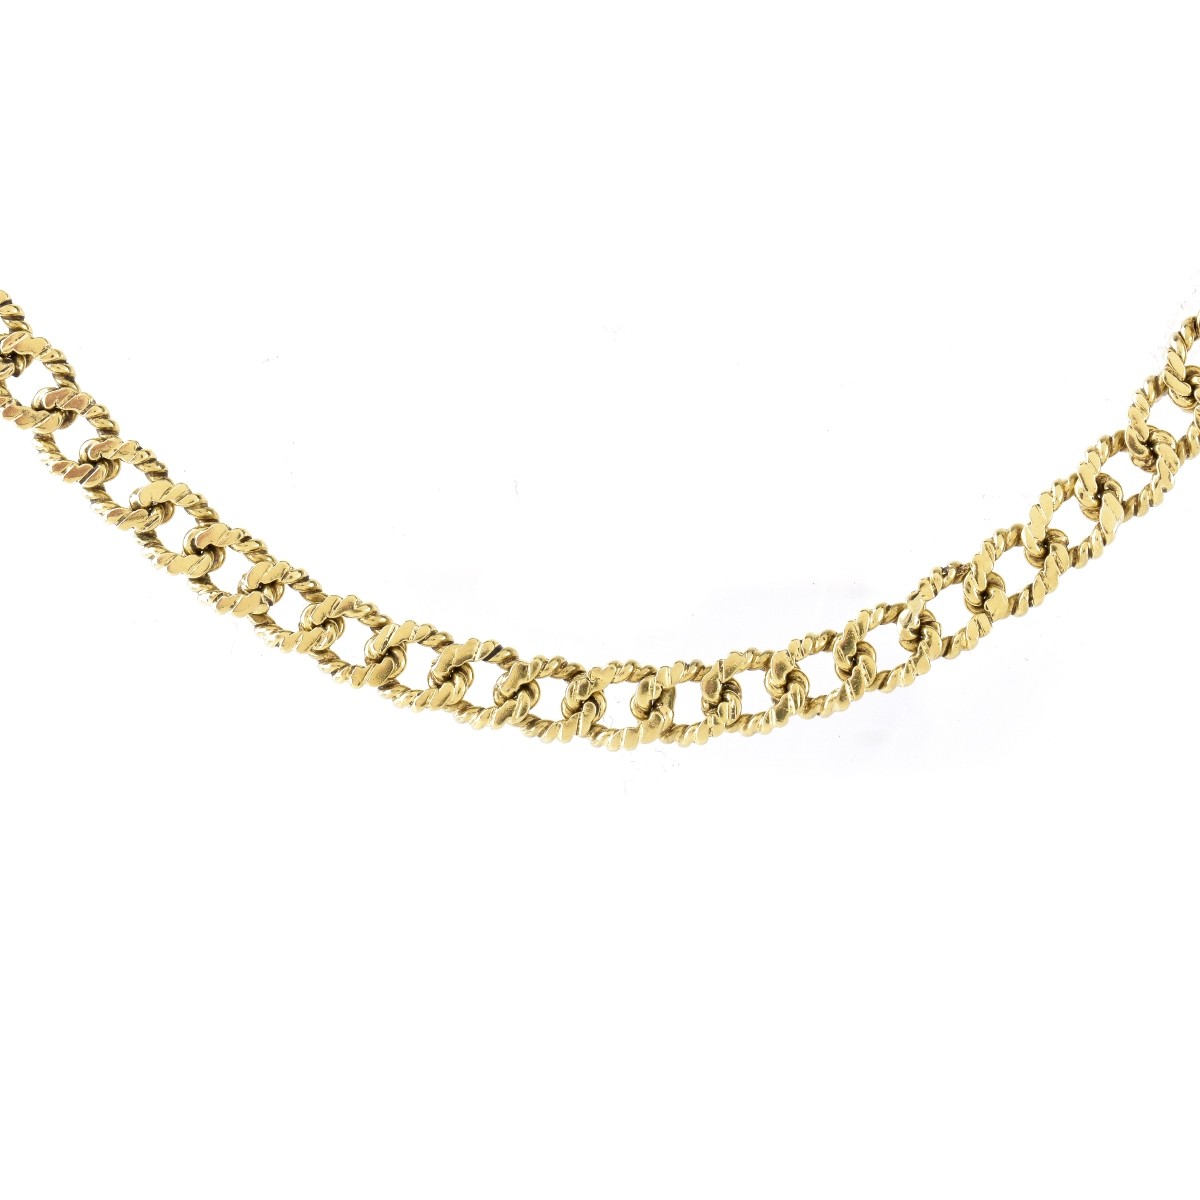 25" Long 14K Gold Necklace